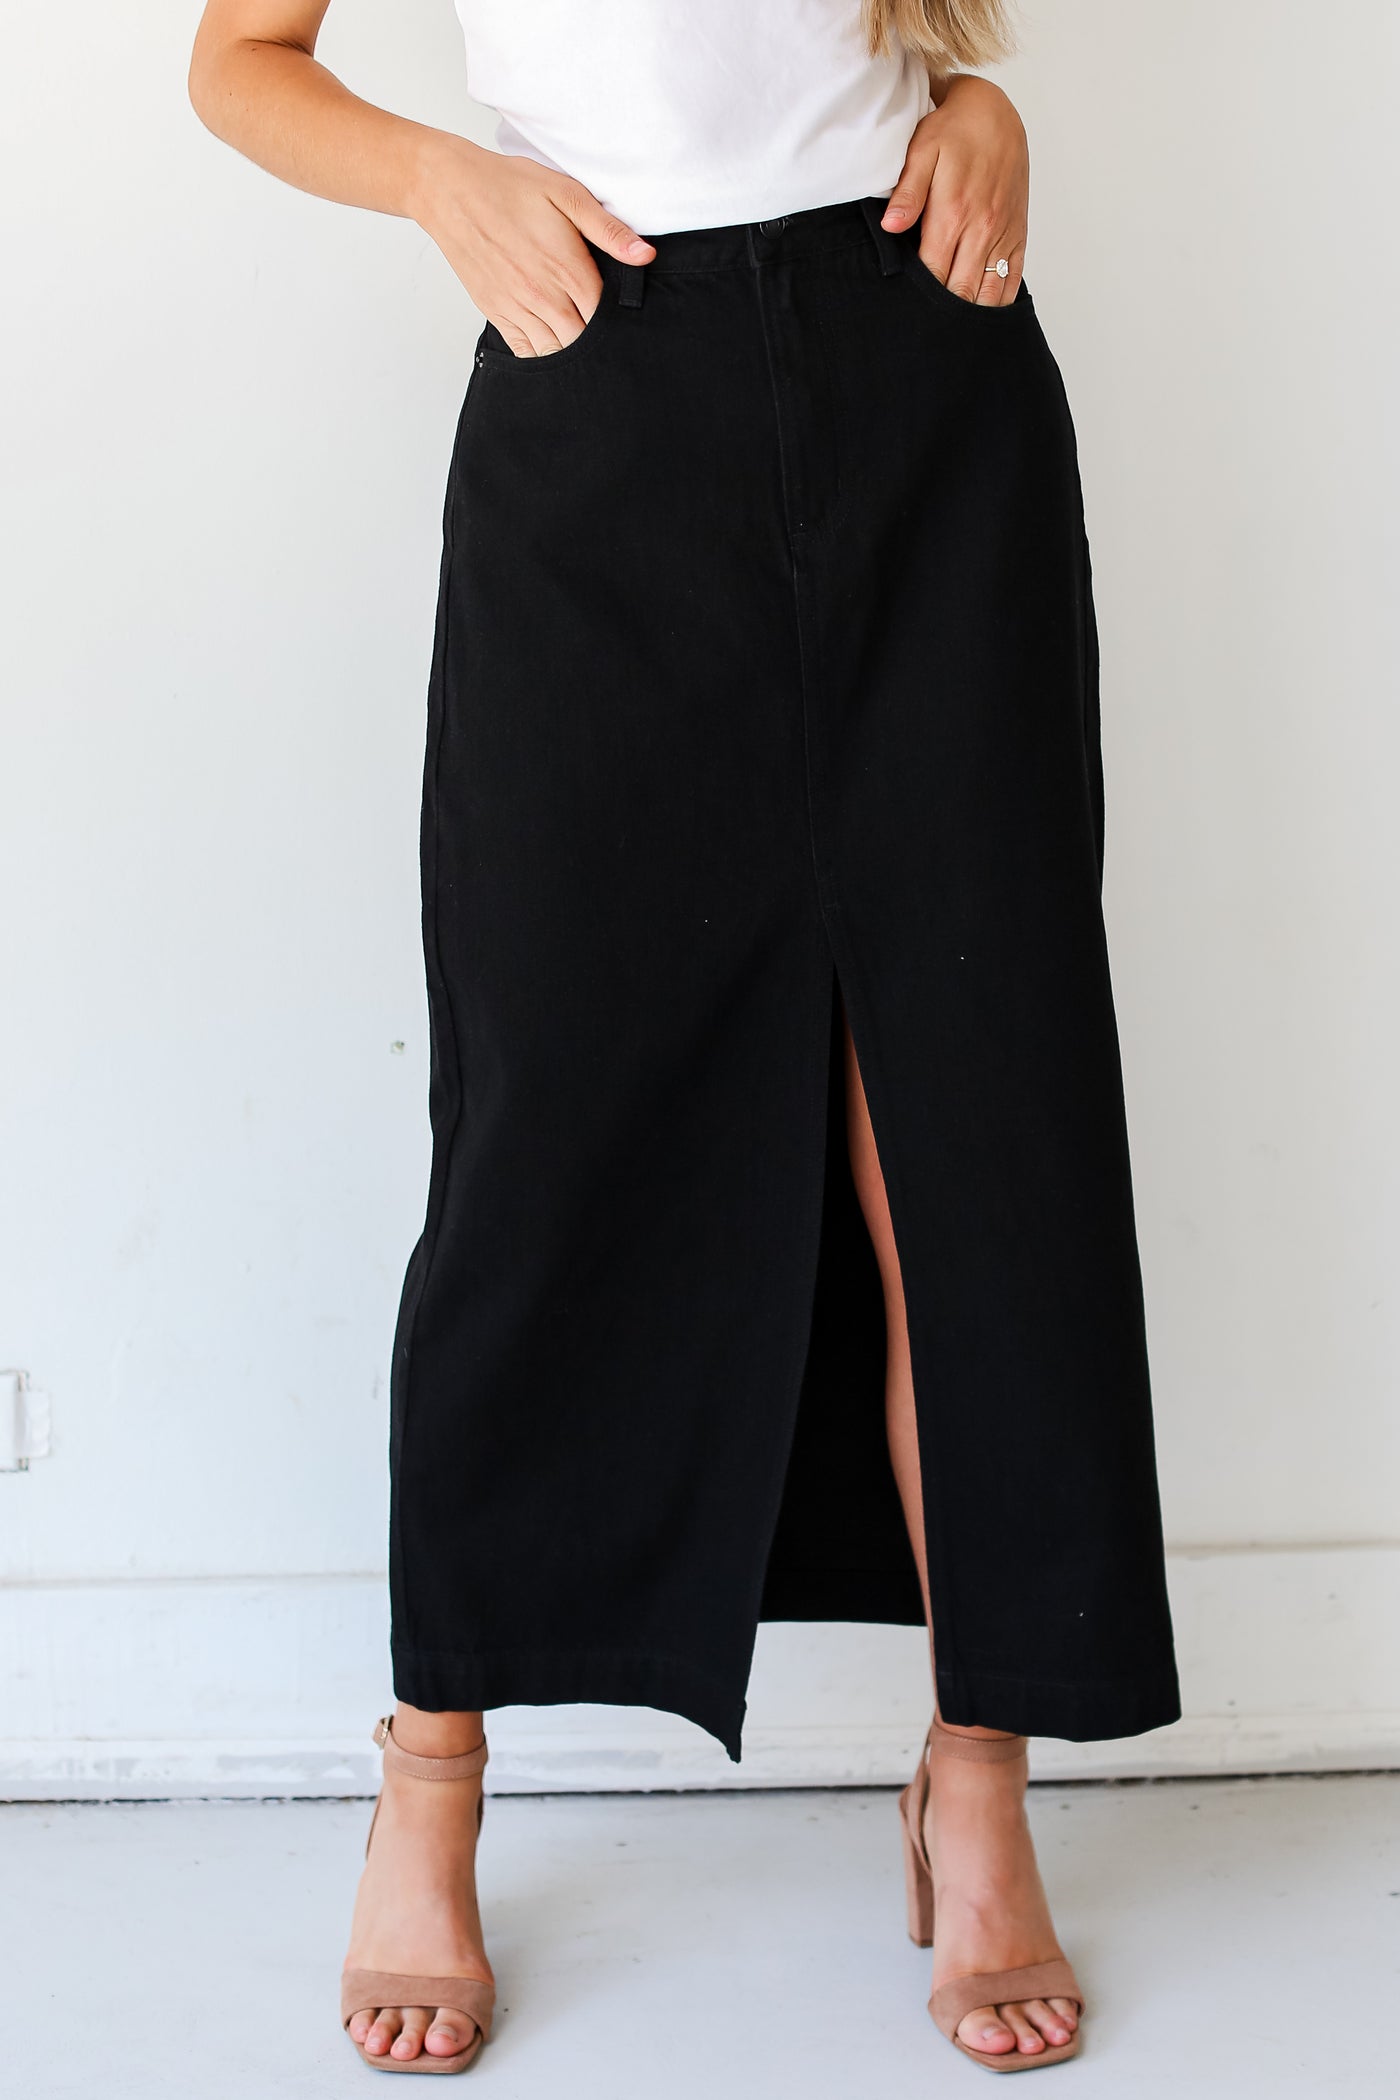 Black Denim Maxi Skirt close up